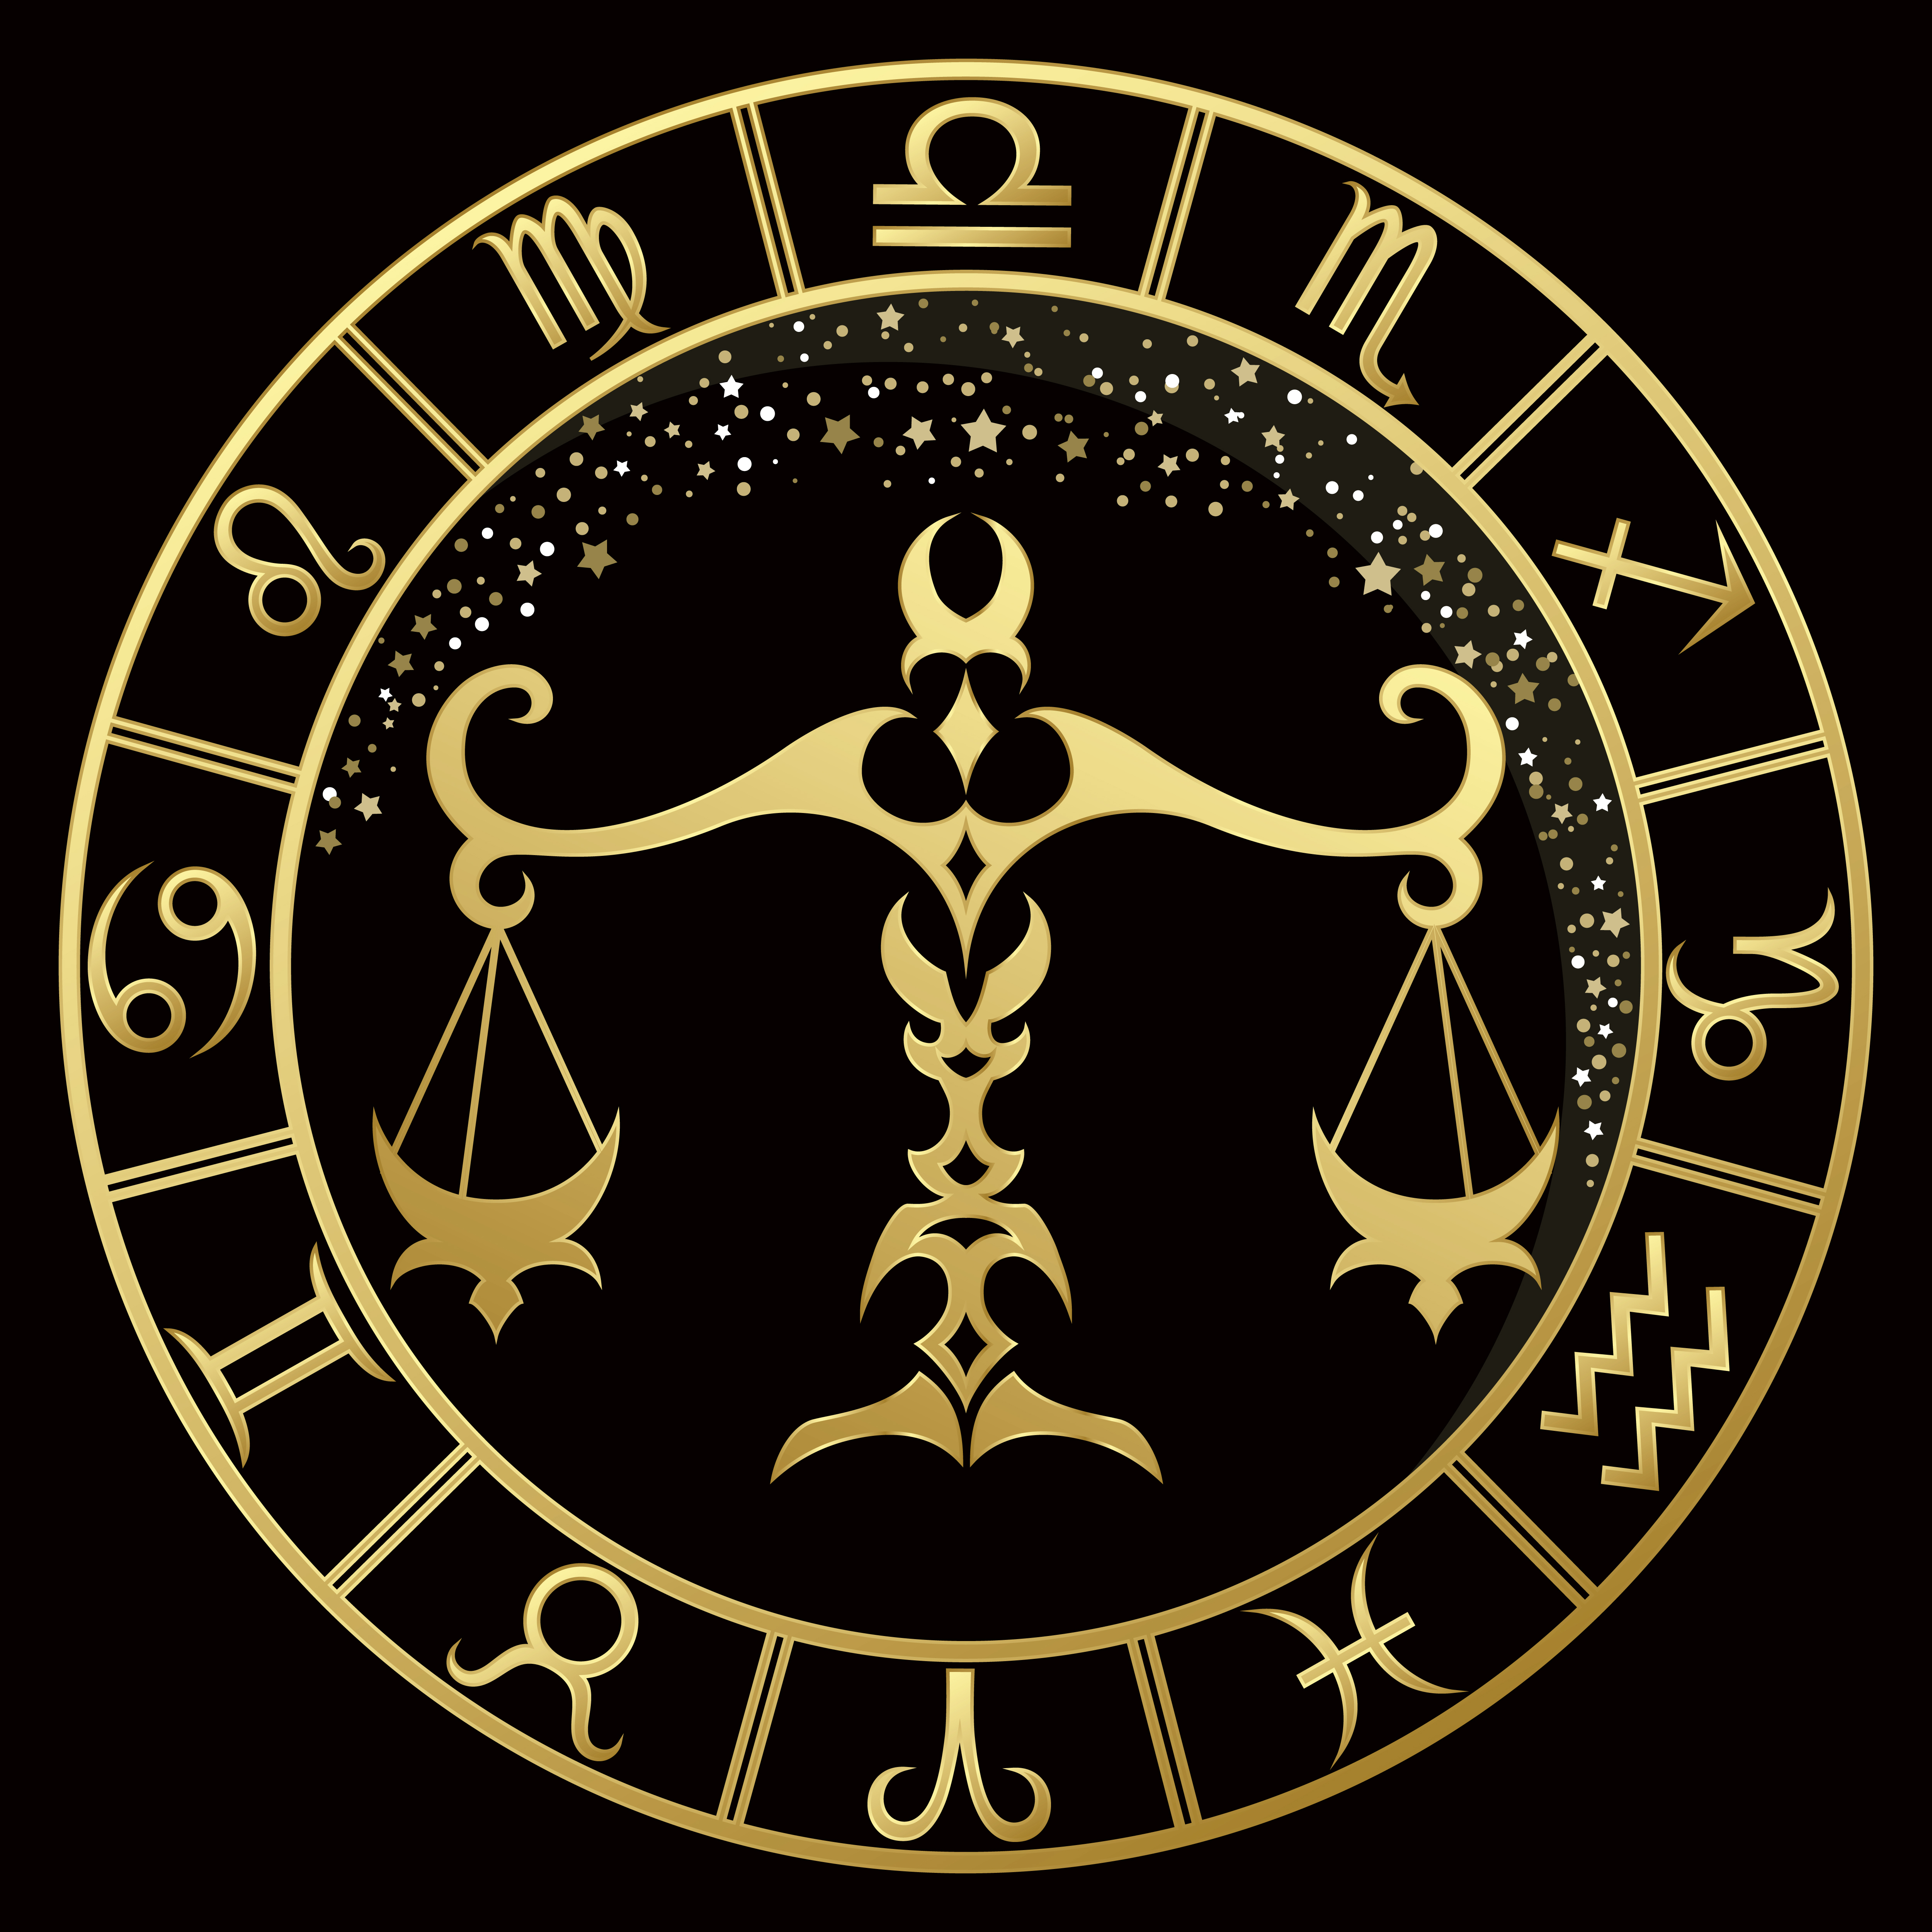 Зодиак весы какой месяц. Libra знак зодиака. Весы знак. Весы знак зодиака символ. Знак зодиака весы рисунок.